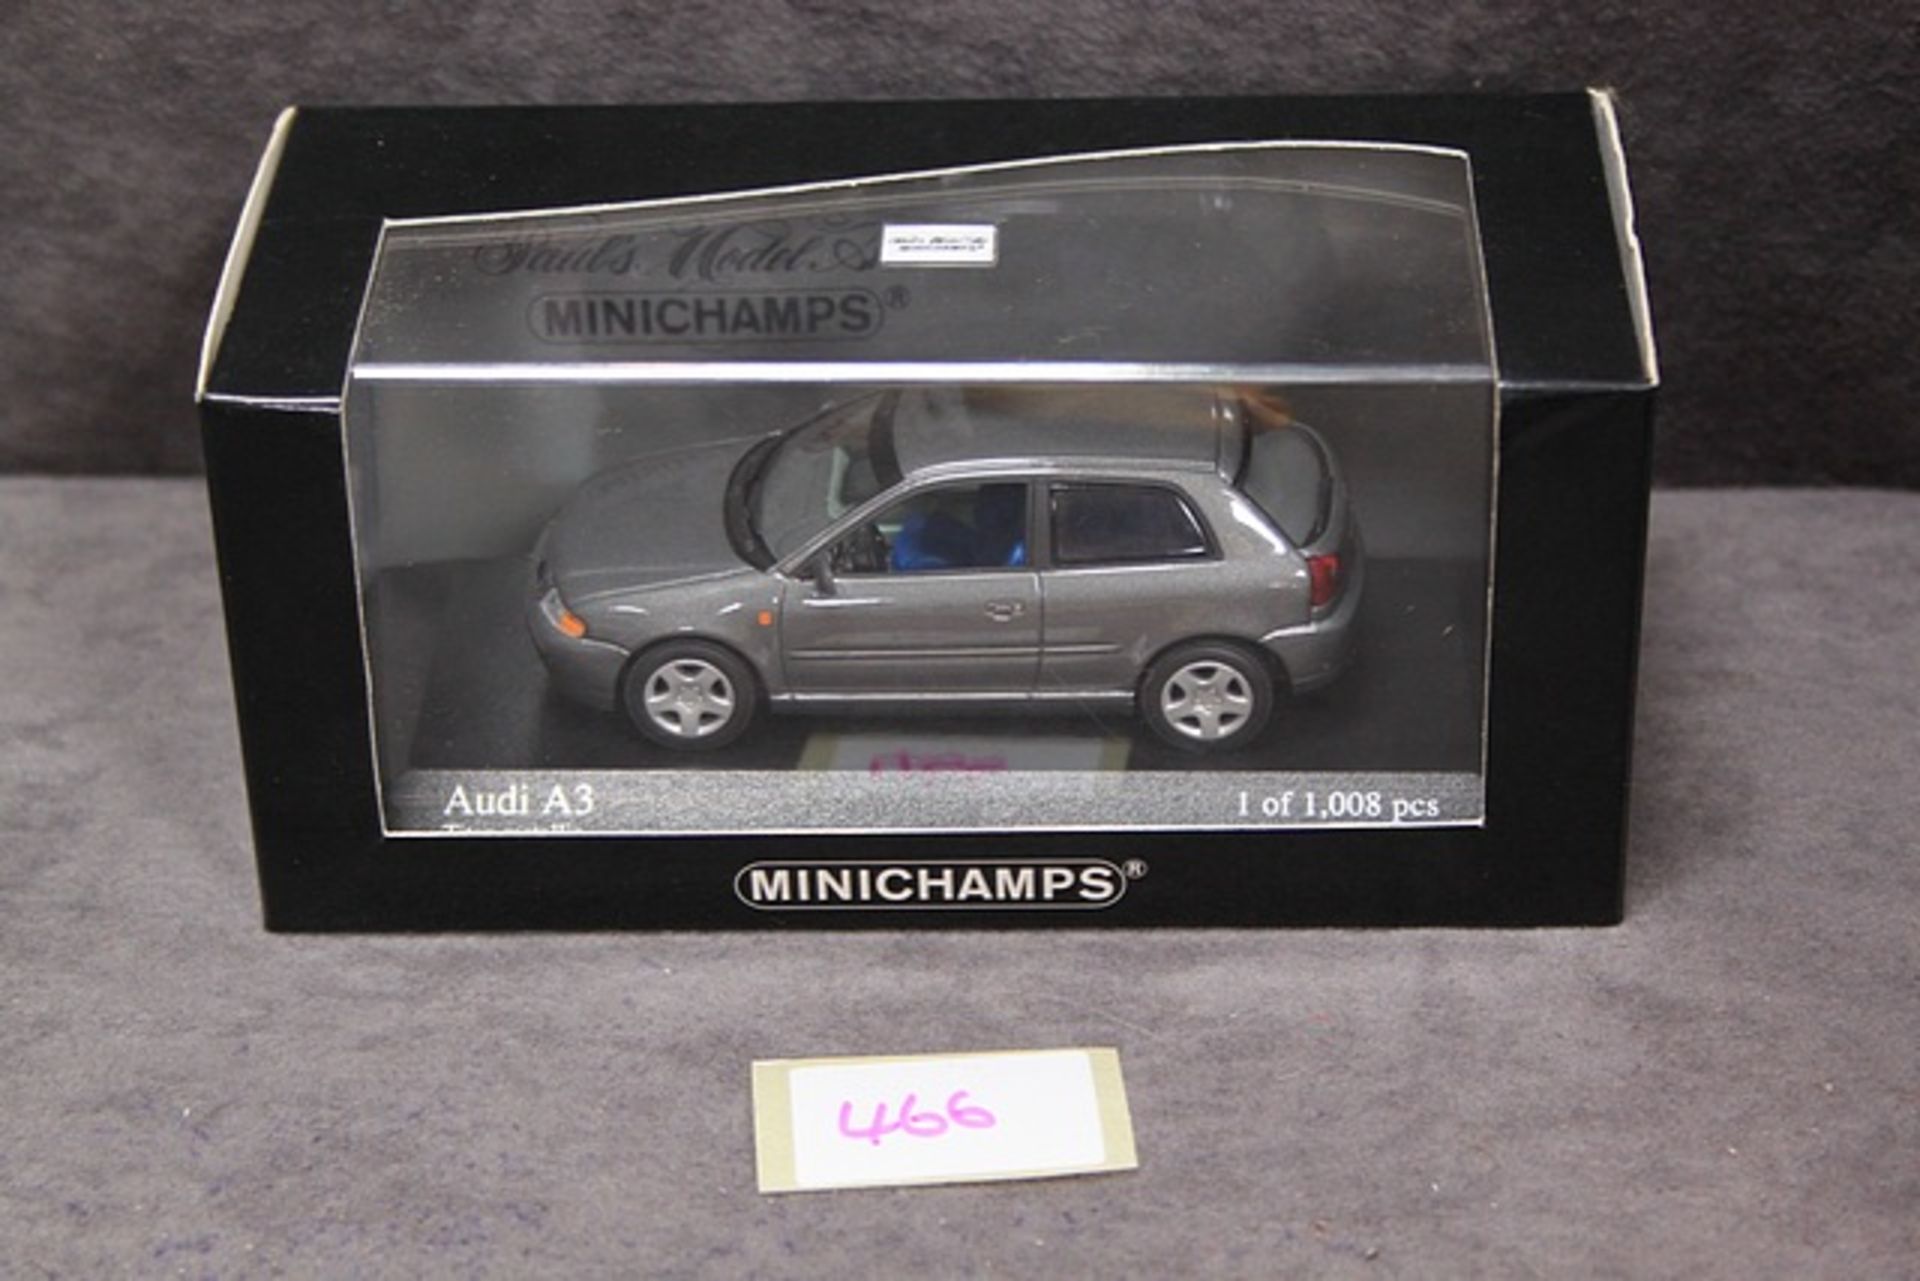 Mint Minichamps Diecast #430 015105 Audi A3 1995 in metallic grey in display case in box